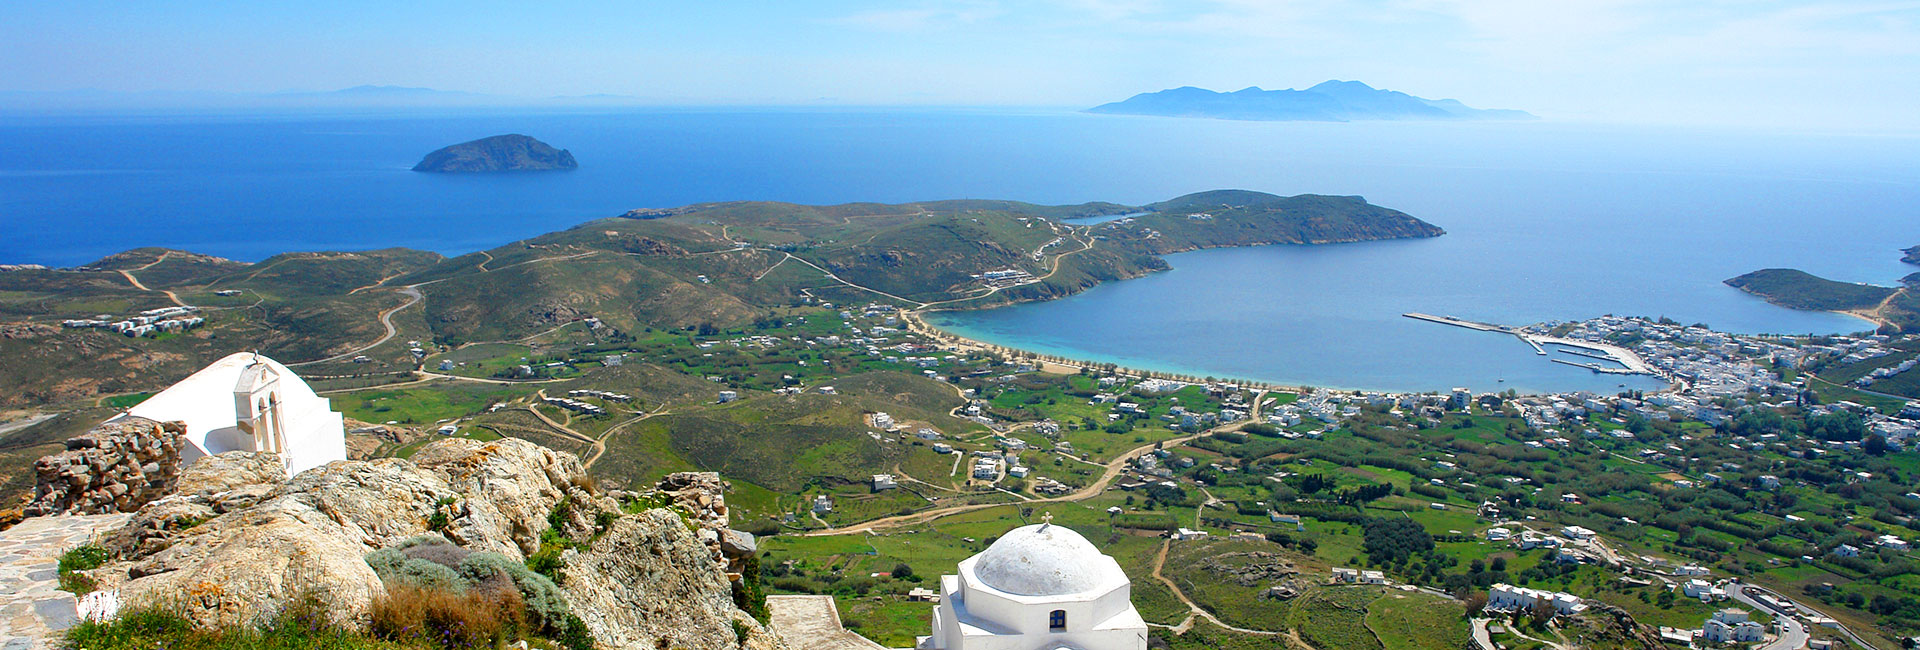 Panoramic image of Livadi in Serifos